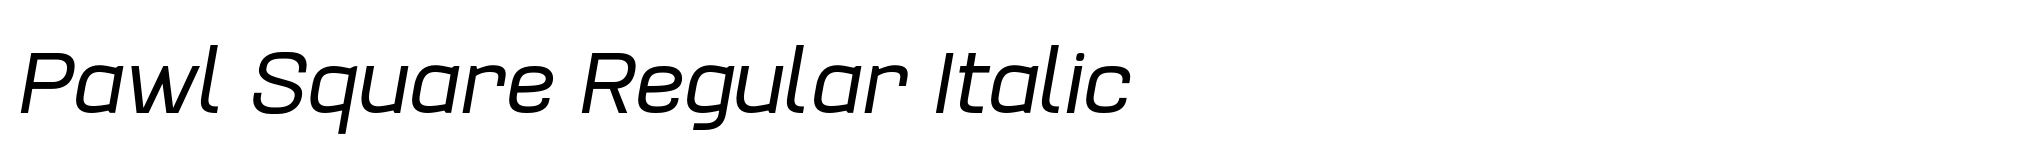 Pawl Square Regular Italic image